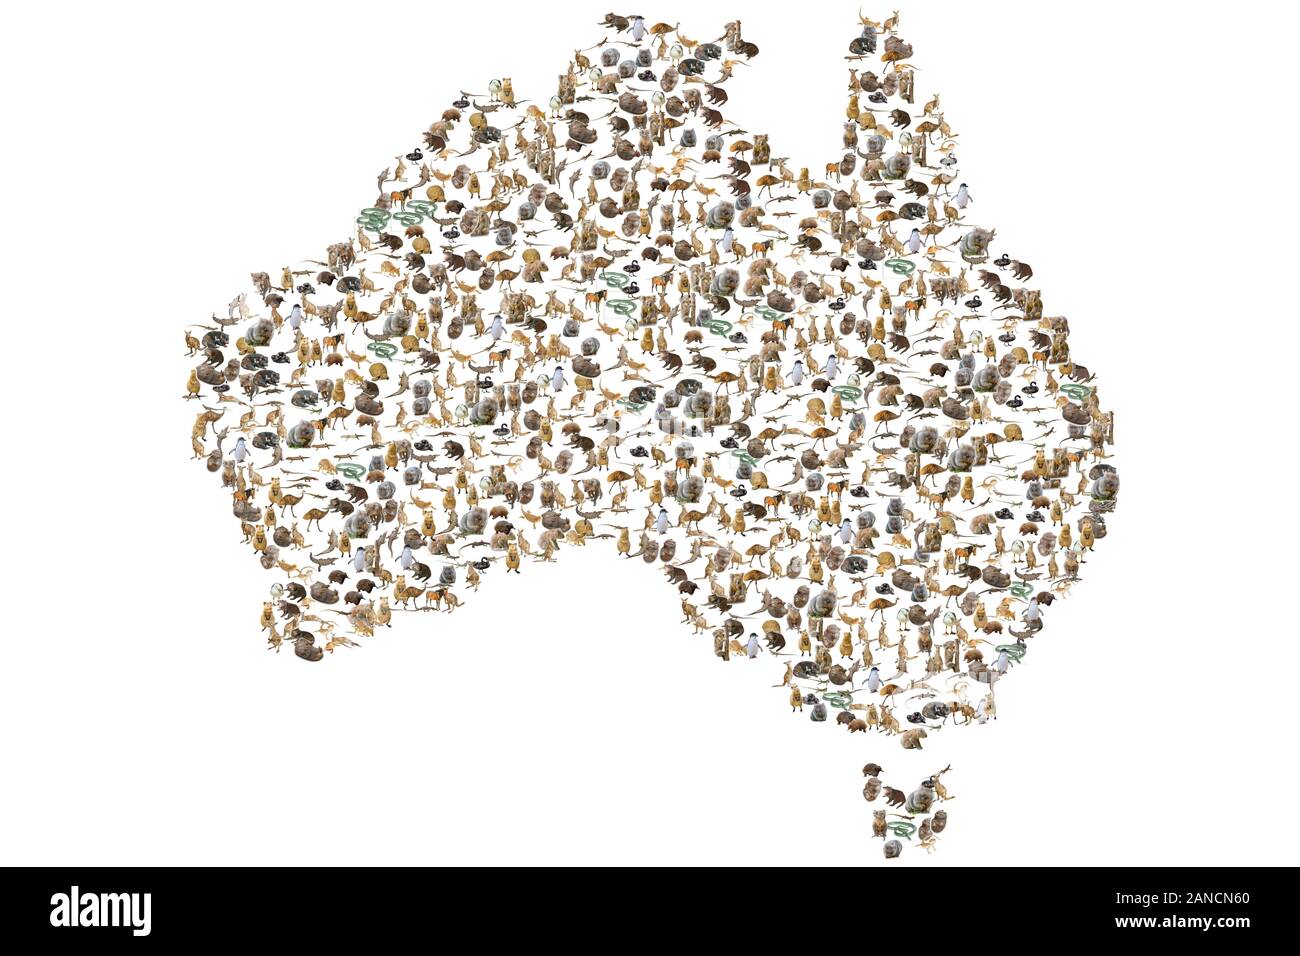 Australian animals in Australian map. Wildlife animals: Emu, Echidna, Tasmanian Devil, Wombat, Kangaroo, Wallaby and Penguin, Ducks, Snakes Lizards Stock Photo